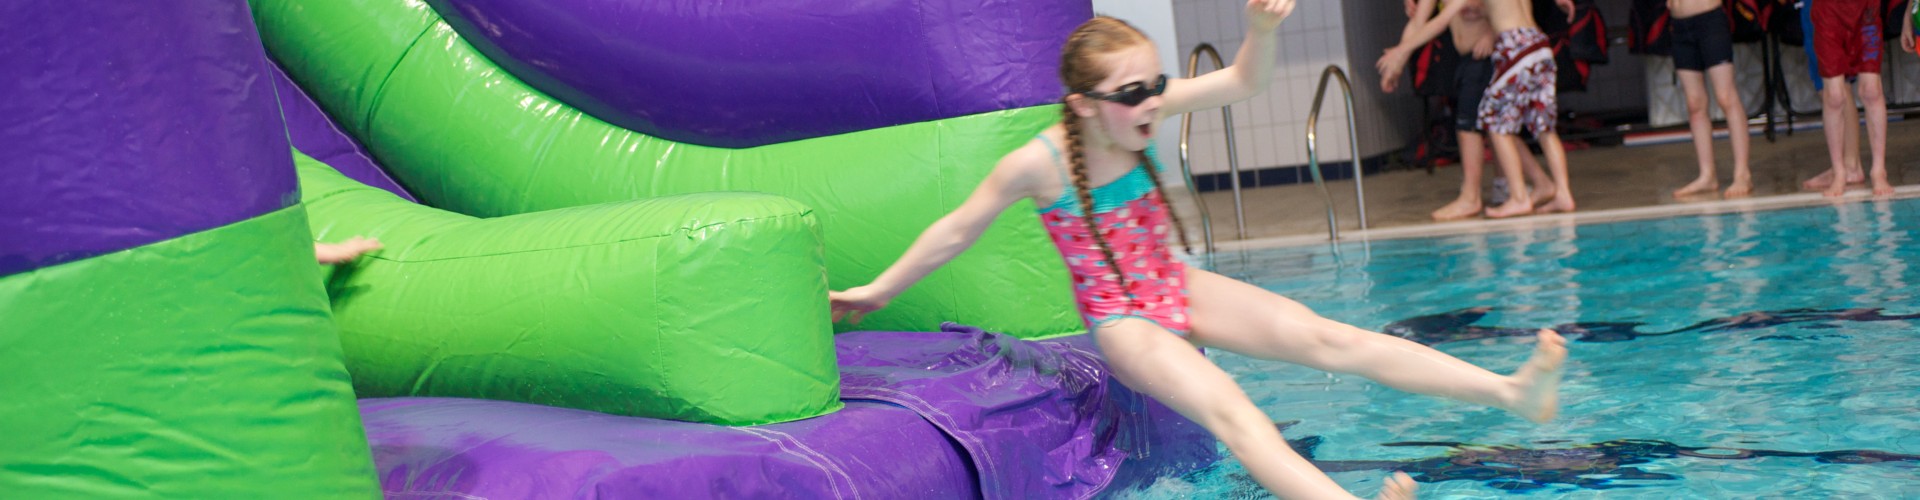 Girl on inflatable pool slide laughing